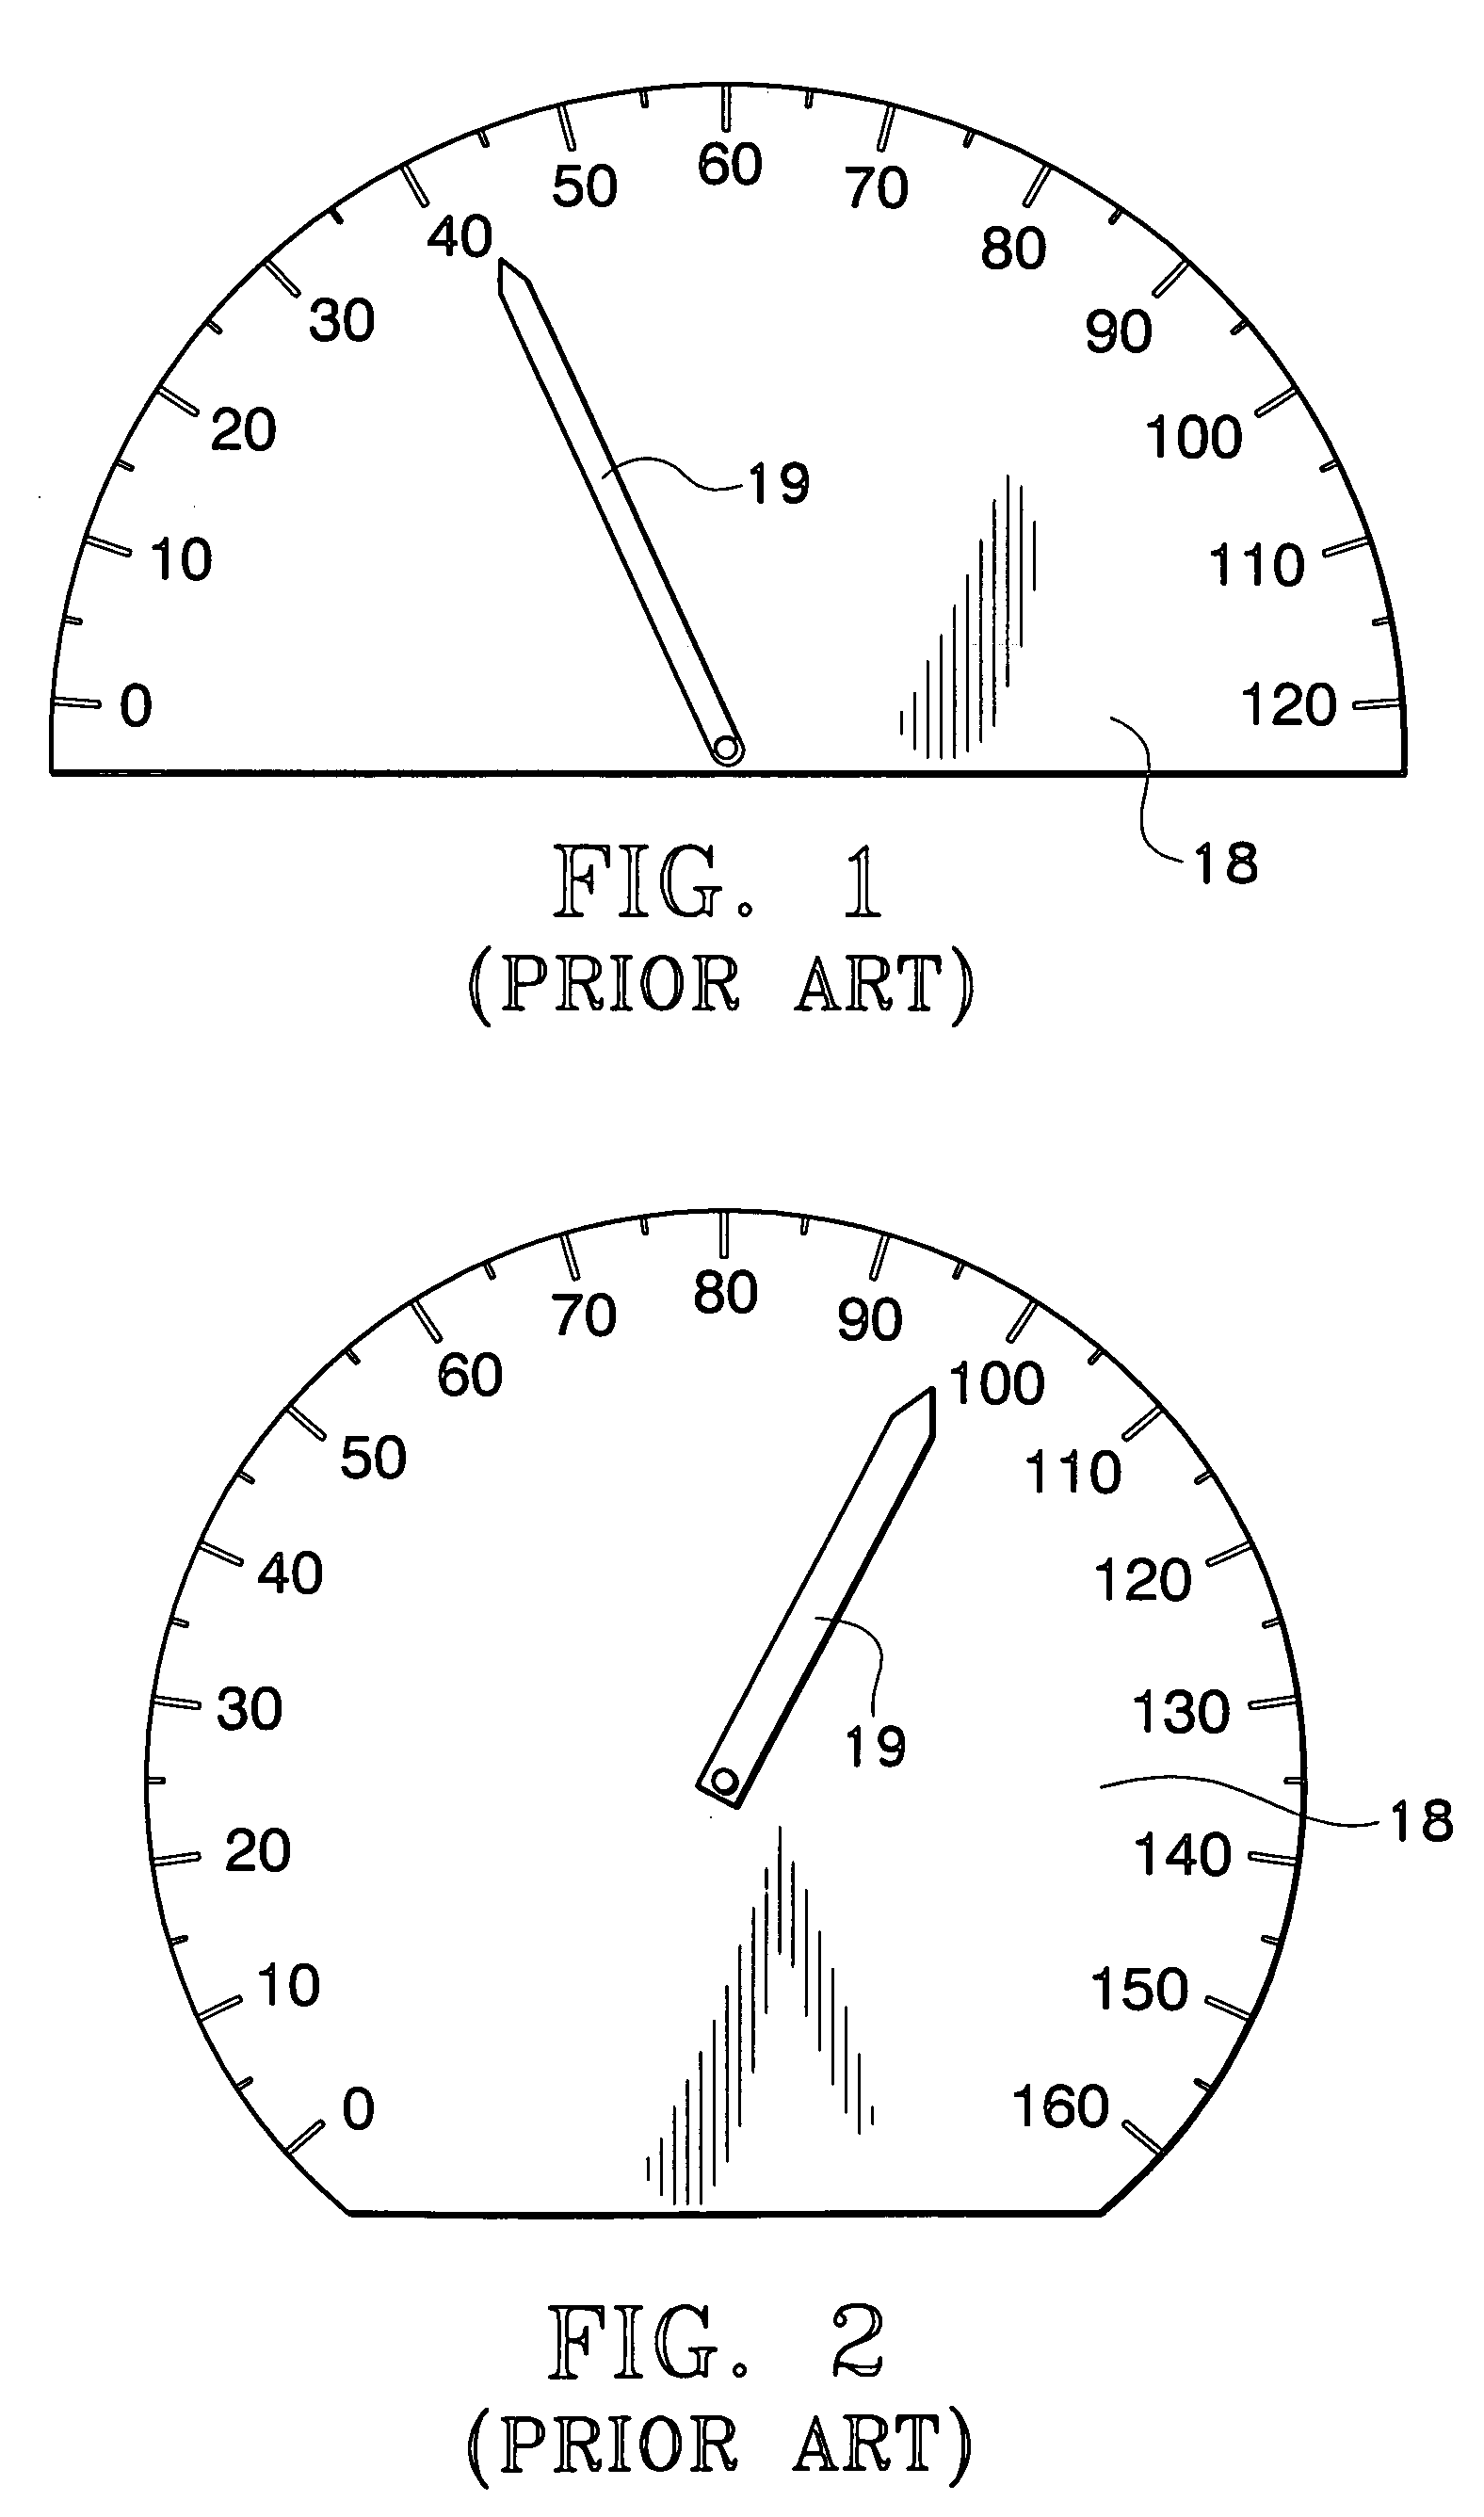 Peripheral view speedometer